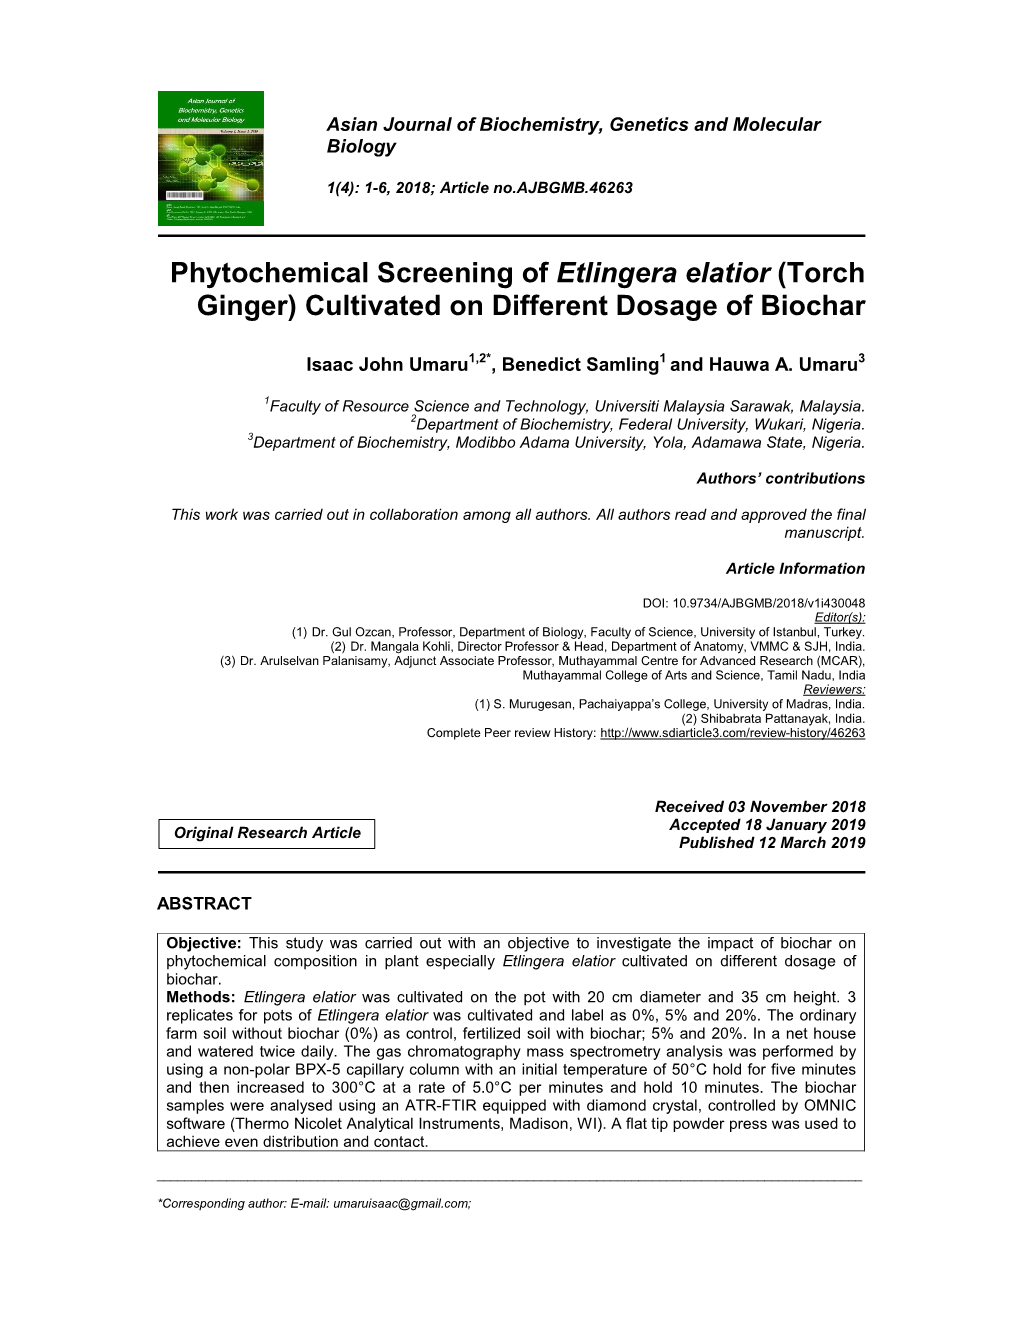 Phytochemical Screening of Etlingera Elatior (Torch Ginger) Cultivated on Different Dosage of Biochar